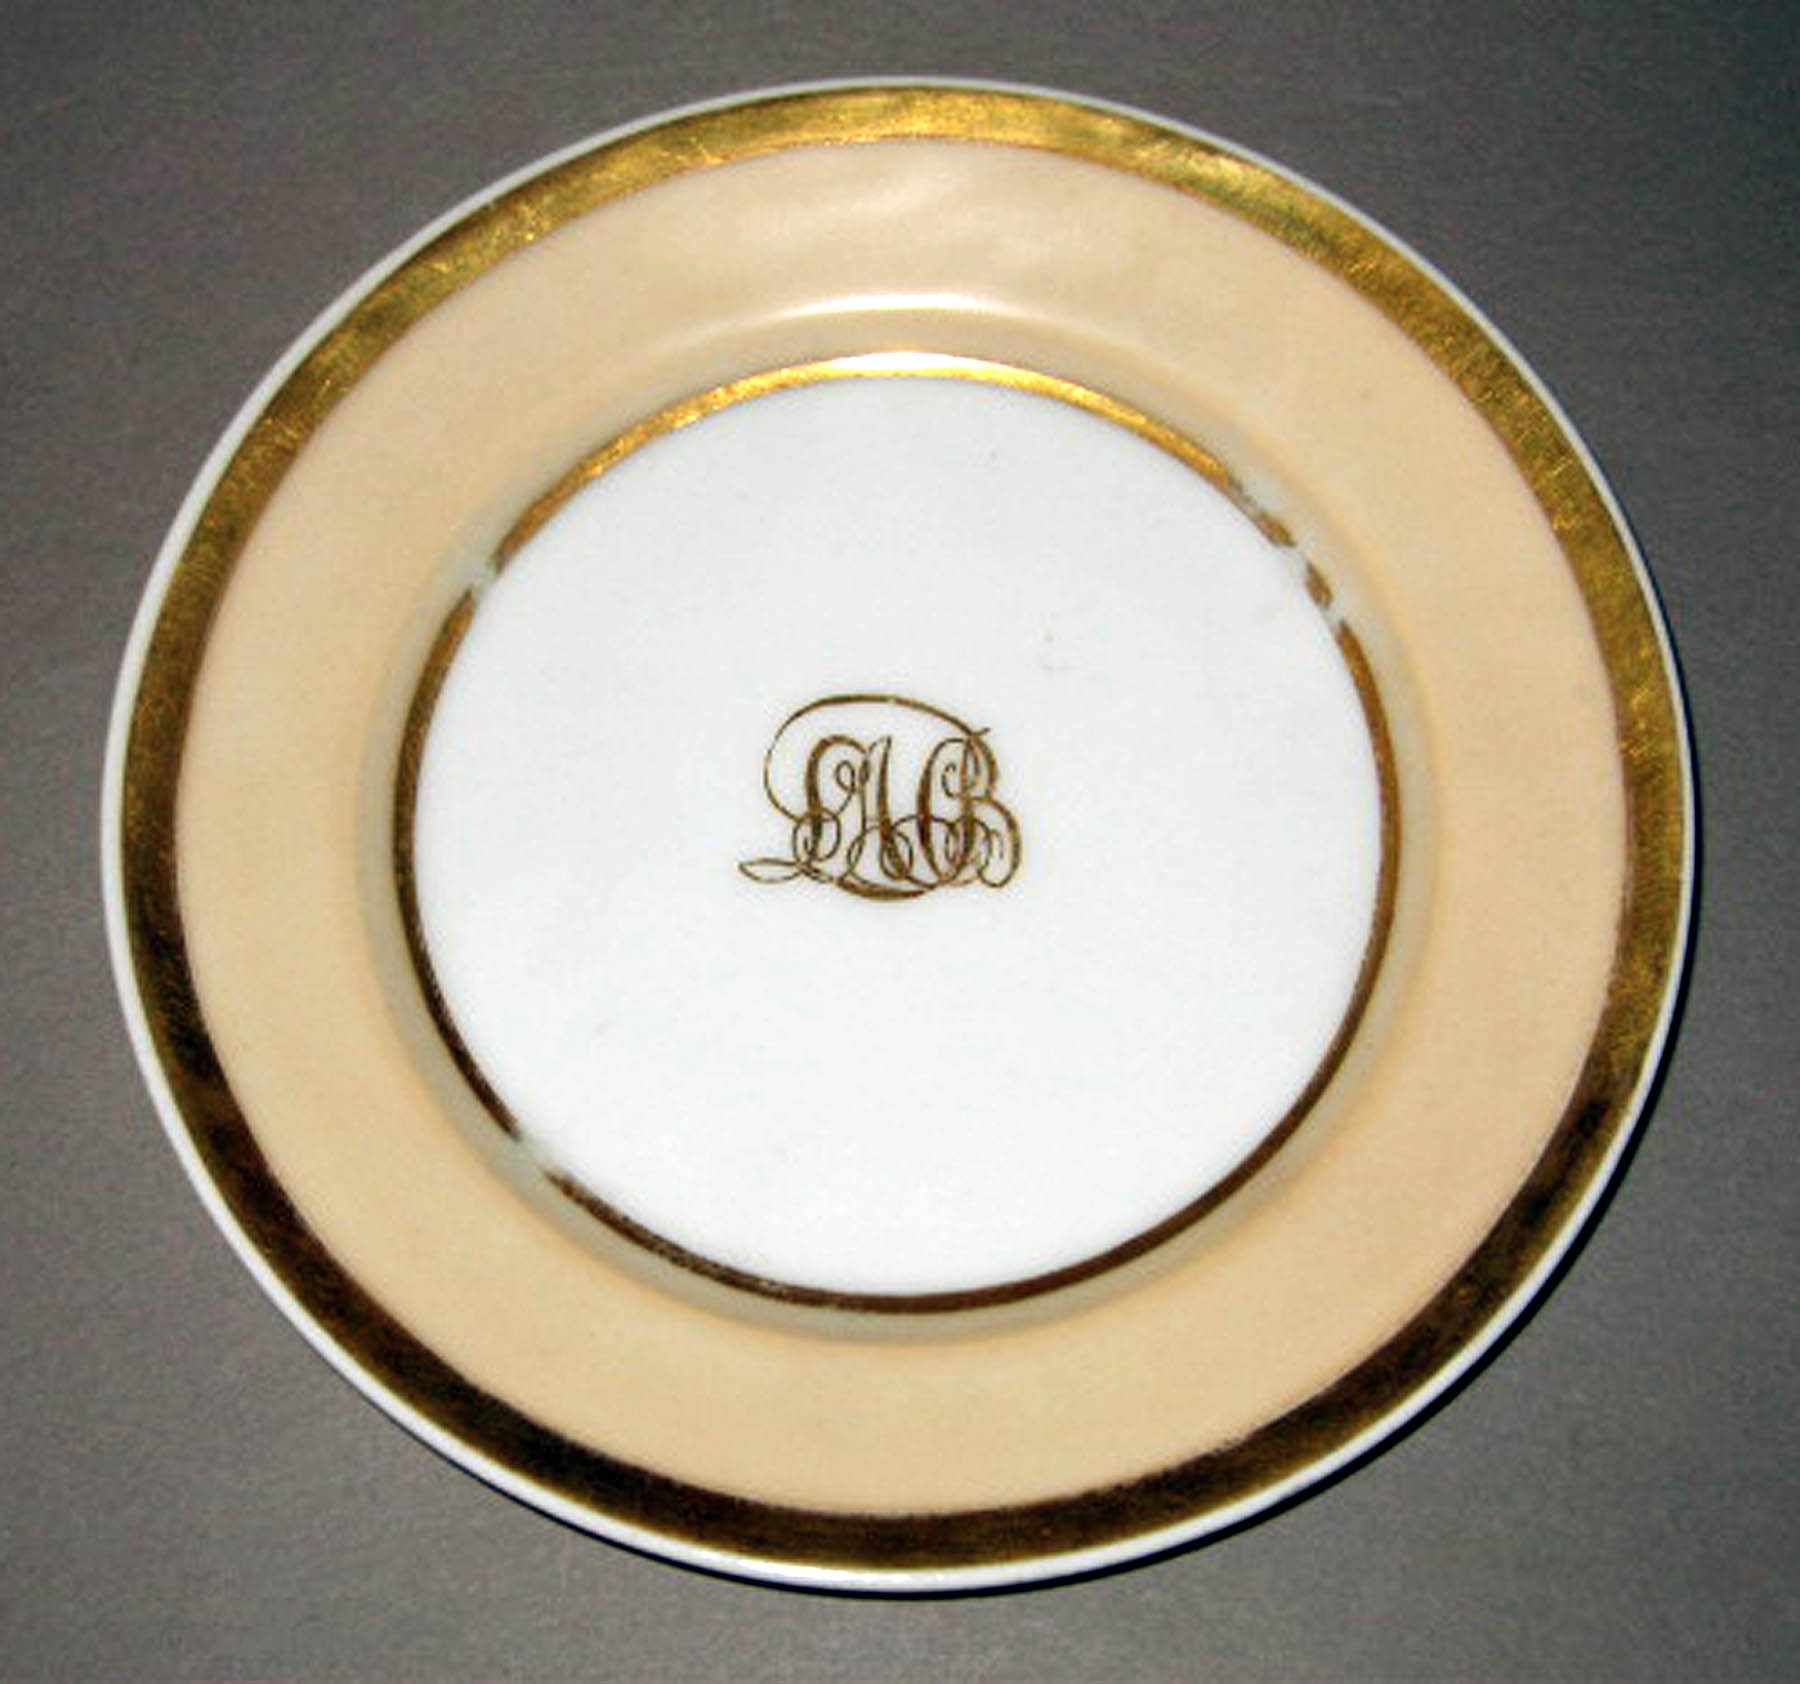 1954.0077.037 Porcelain plate